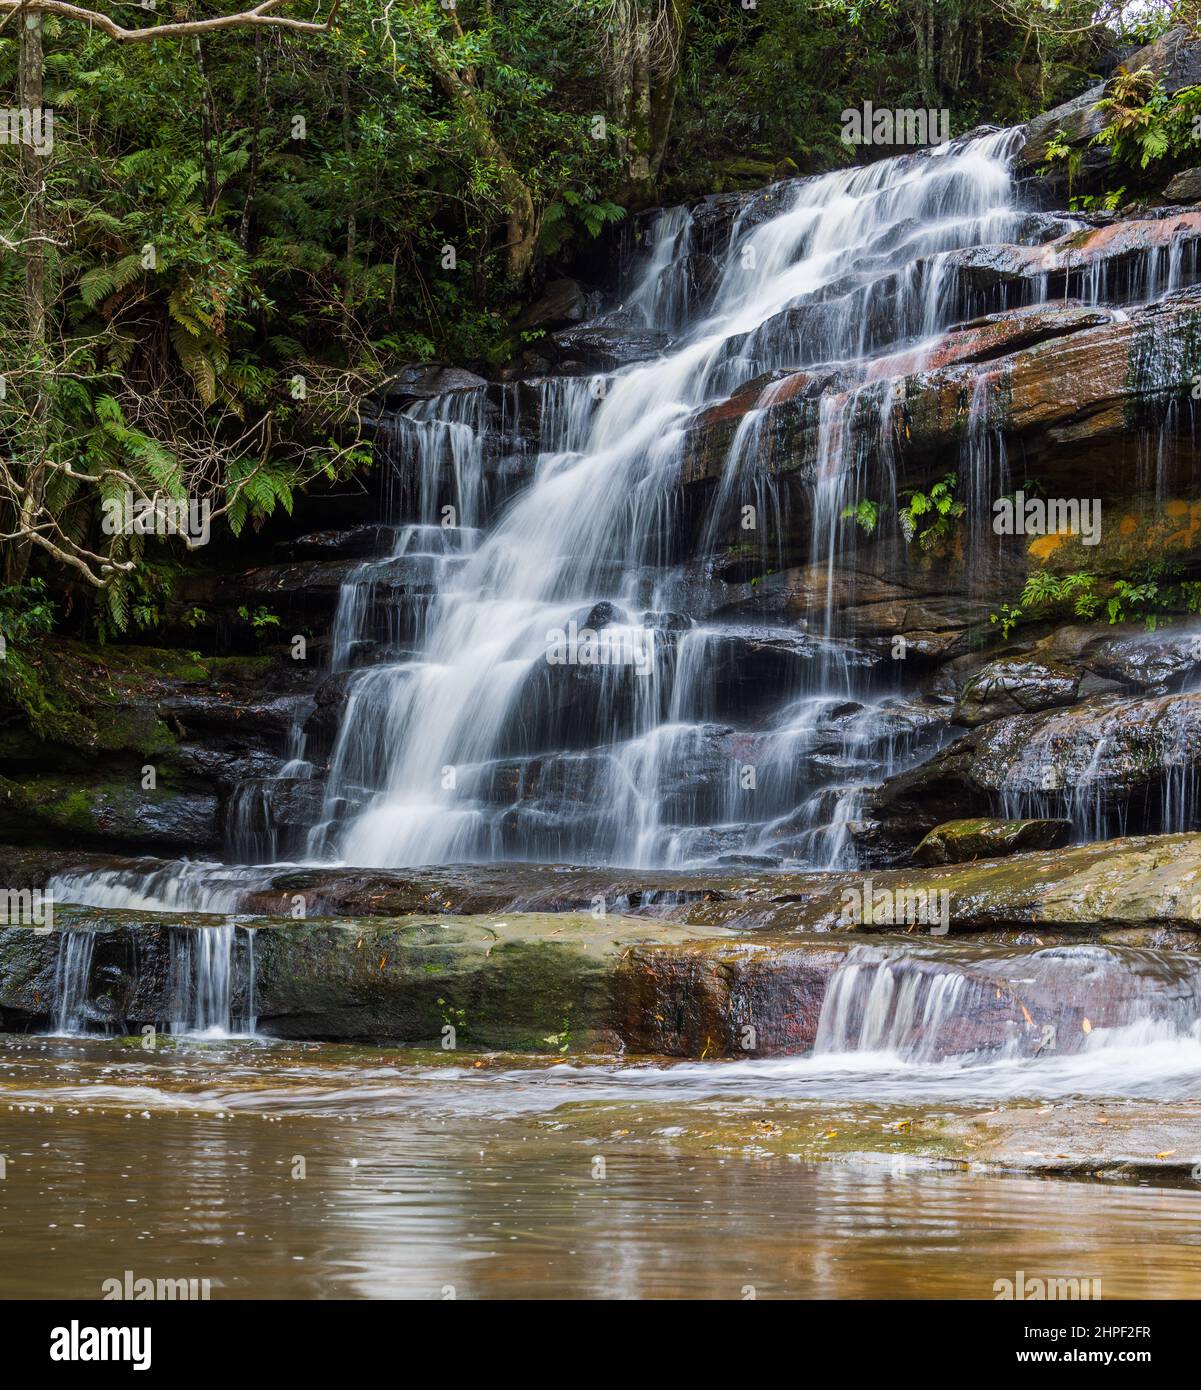 Waterfalls, Rocks and Coastline Stock Photo